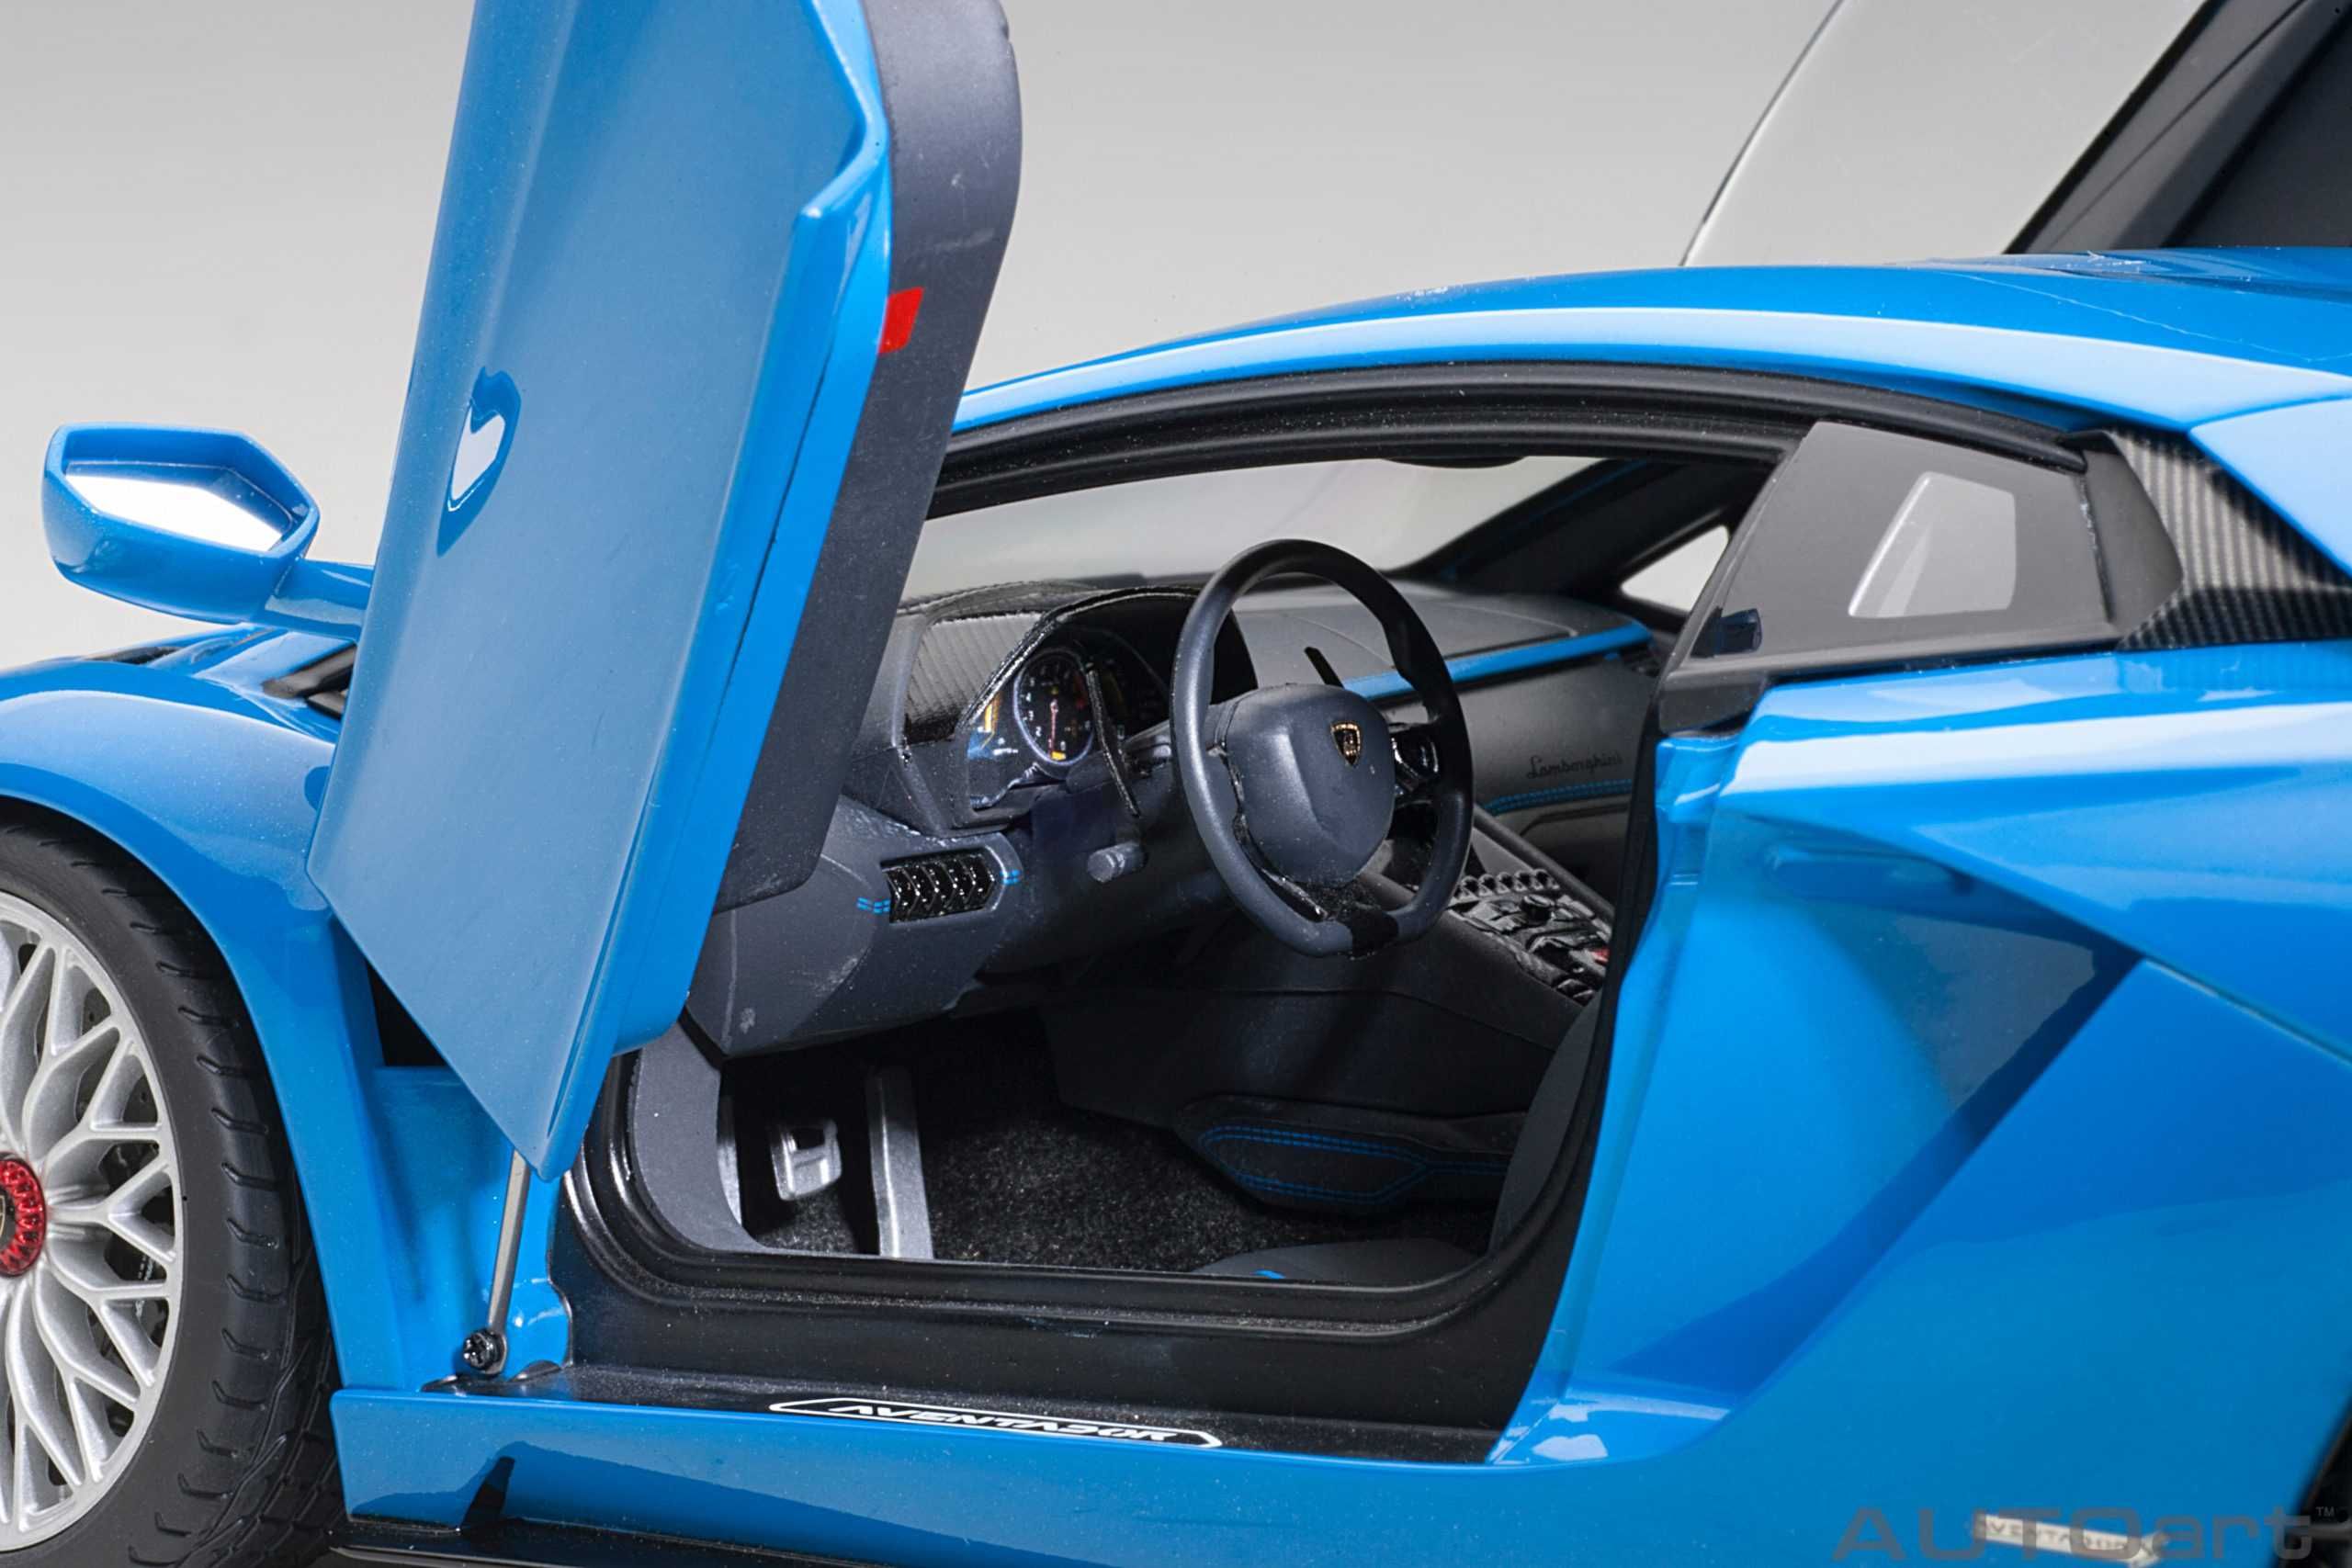 Model 1:18 AUTOart Lamborghini Aventador S 2017 blue